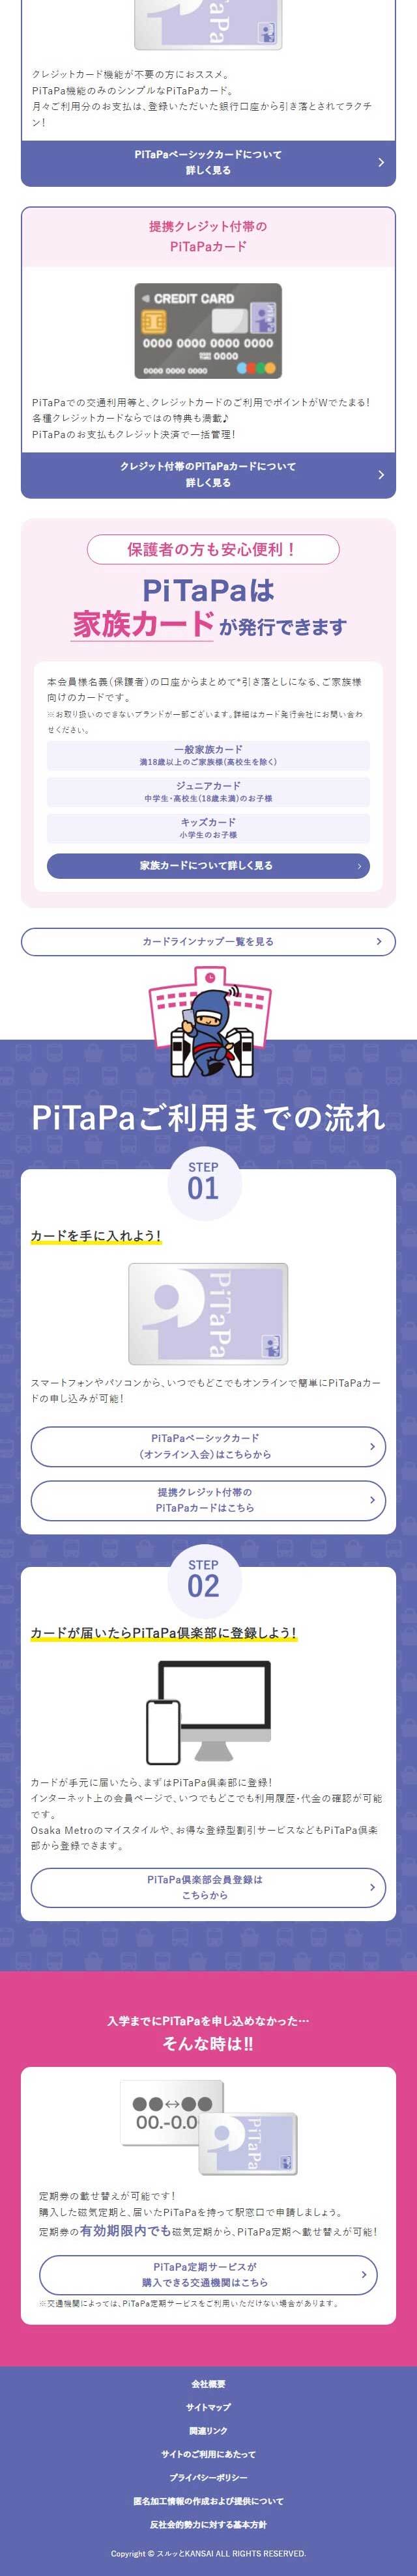 PiTaPa_sp_2